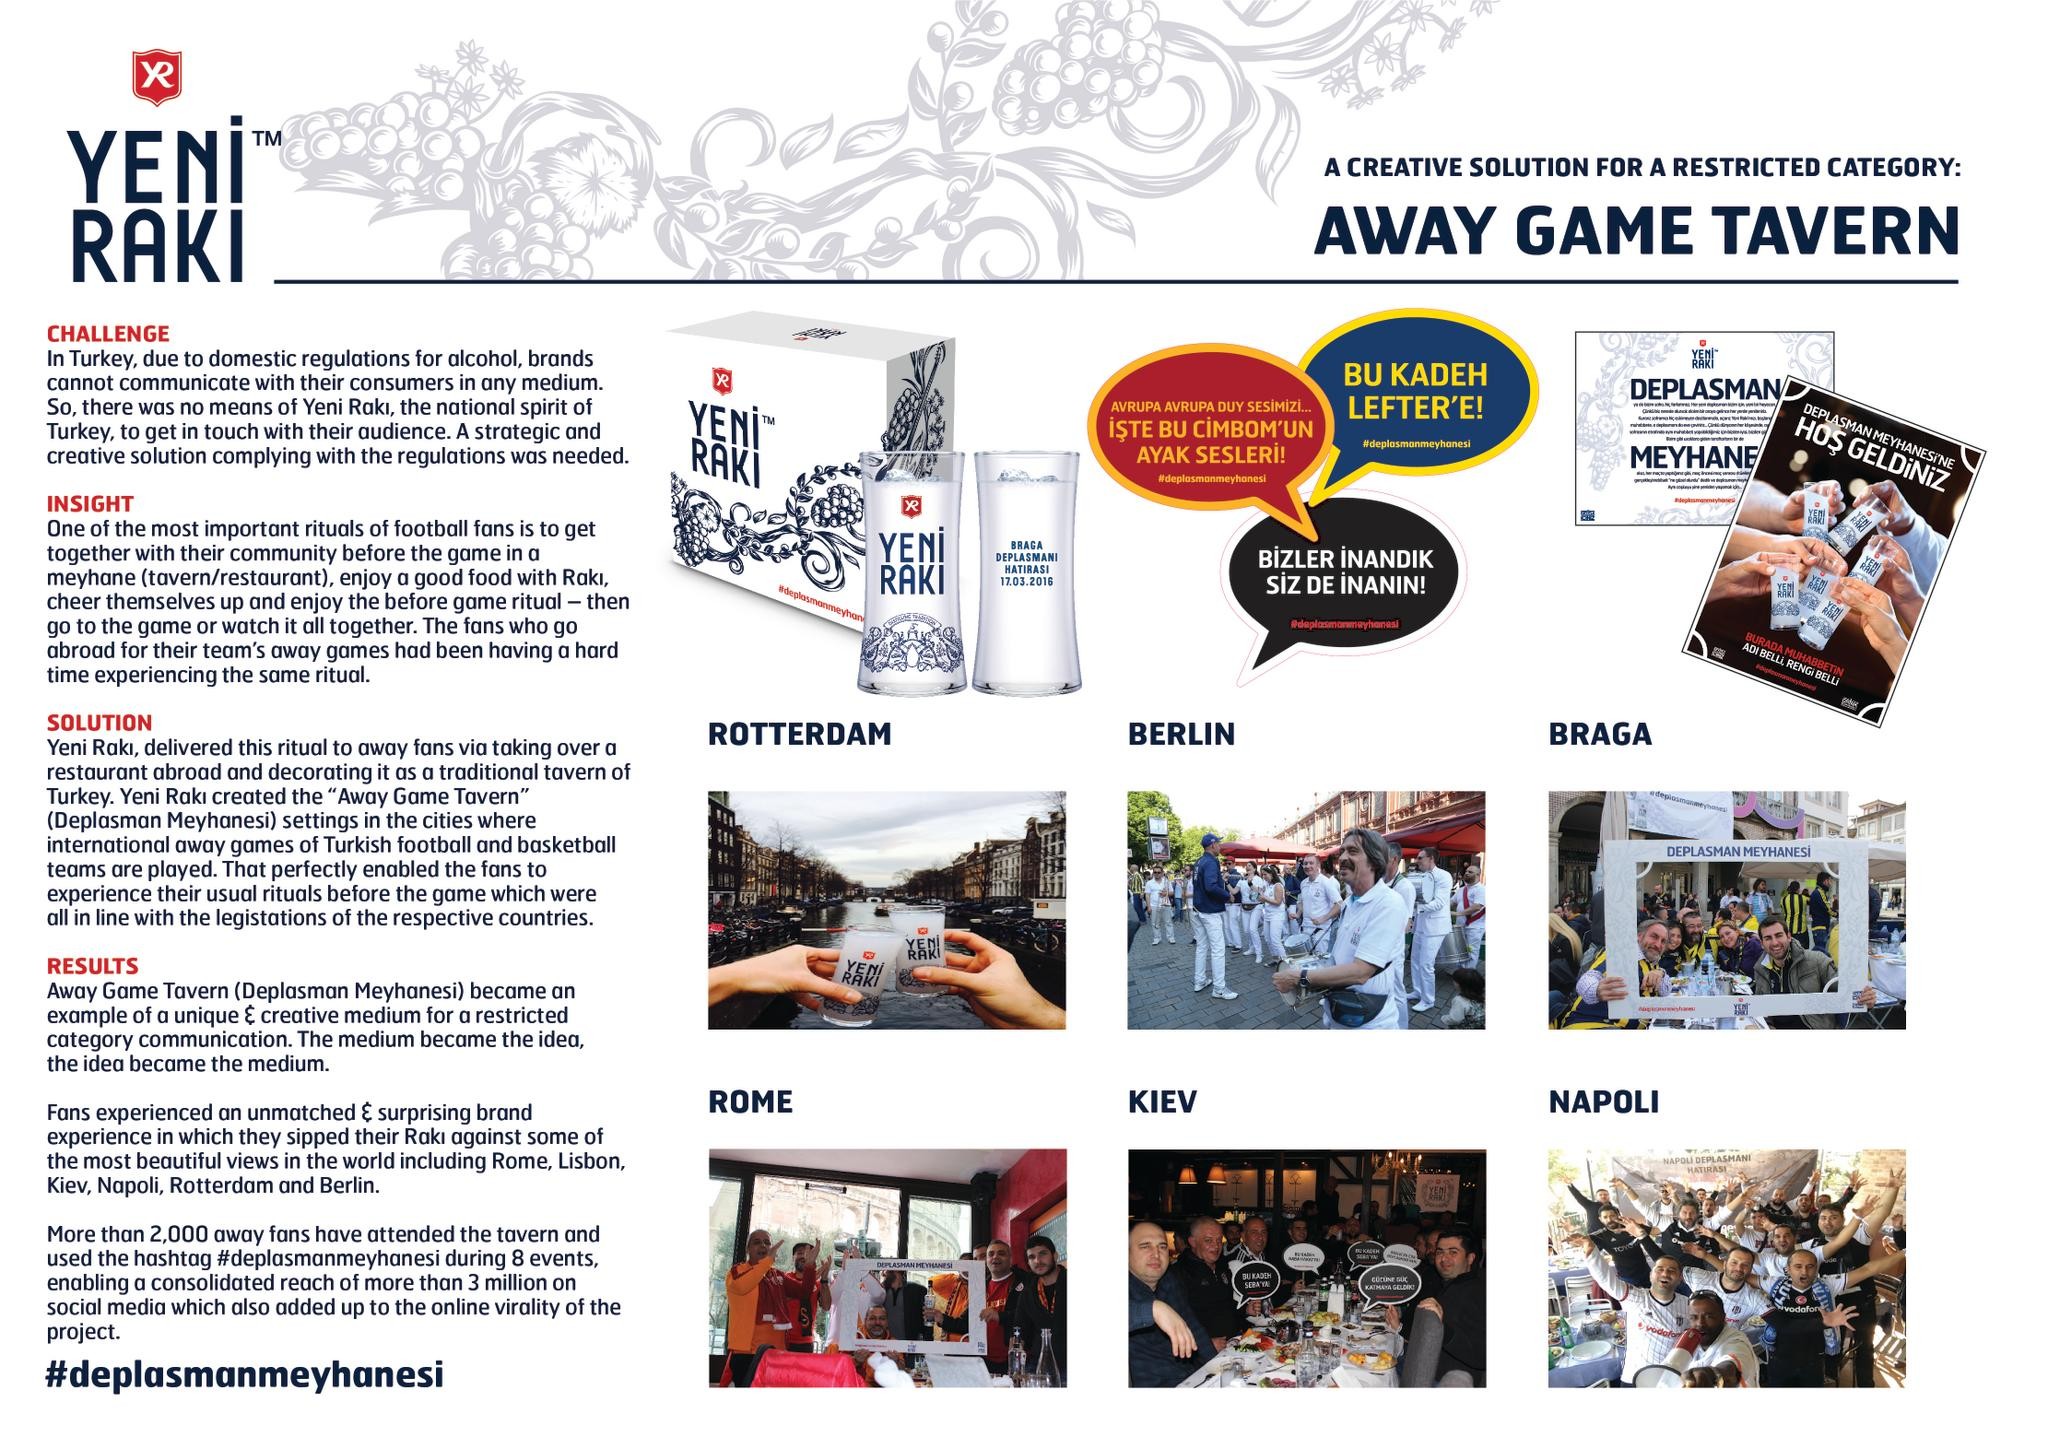 The Away Game Tavern